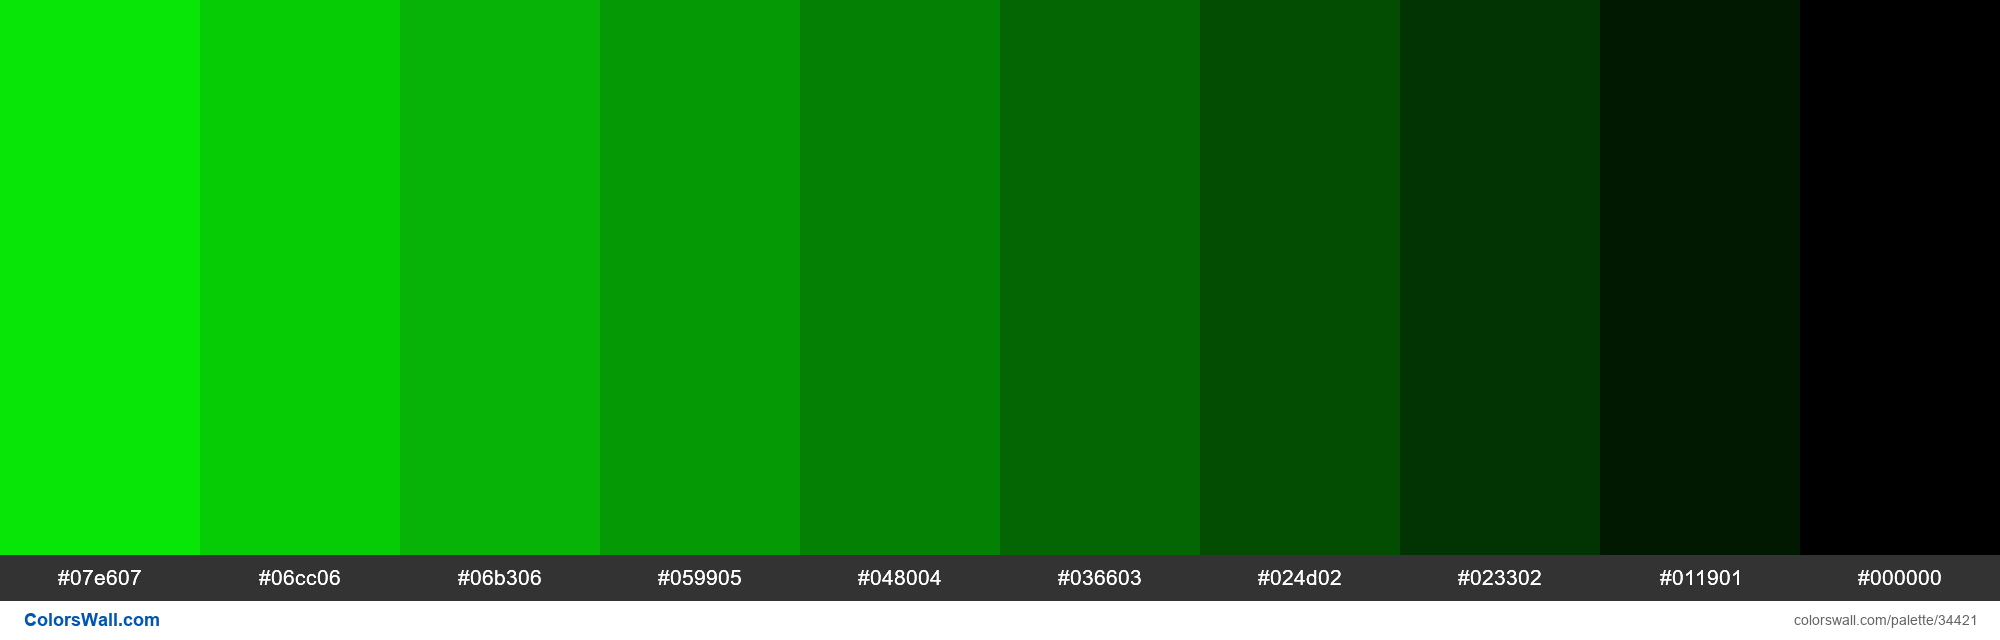 Shades XKCD Color fluorescent green #08ff08 hex palette de